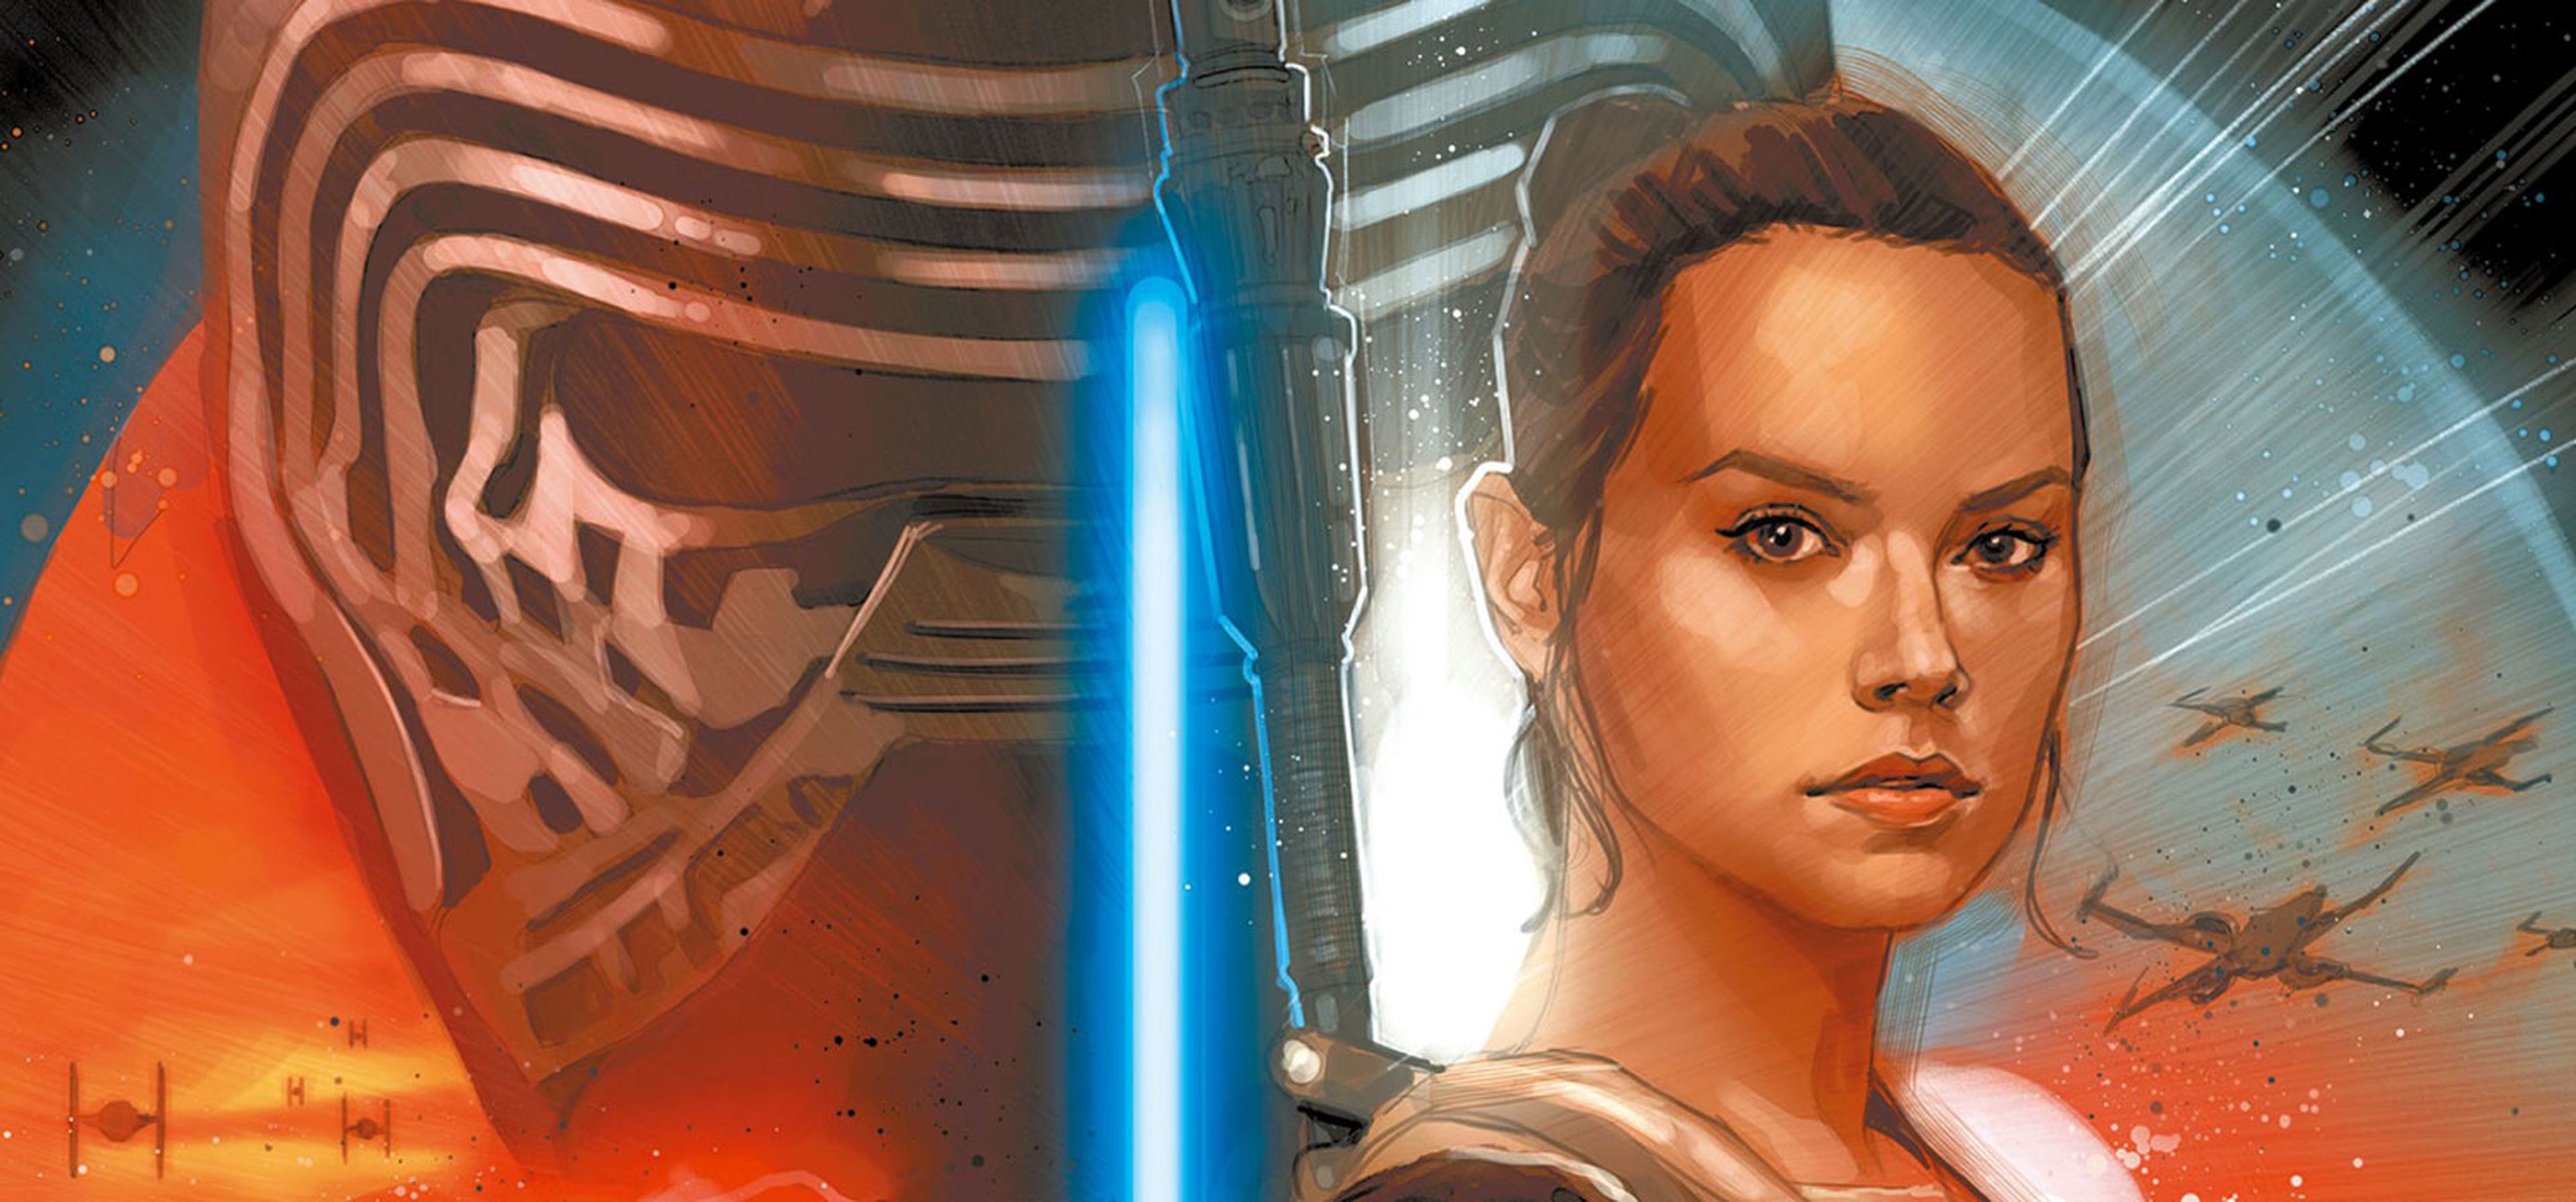 Review del cómic de Star Wars: El despertar de la Fuerza